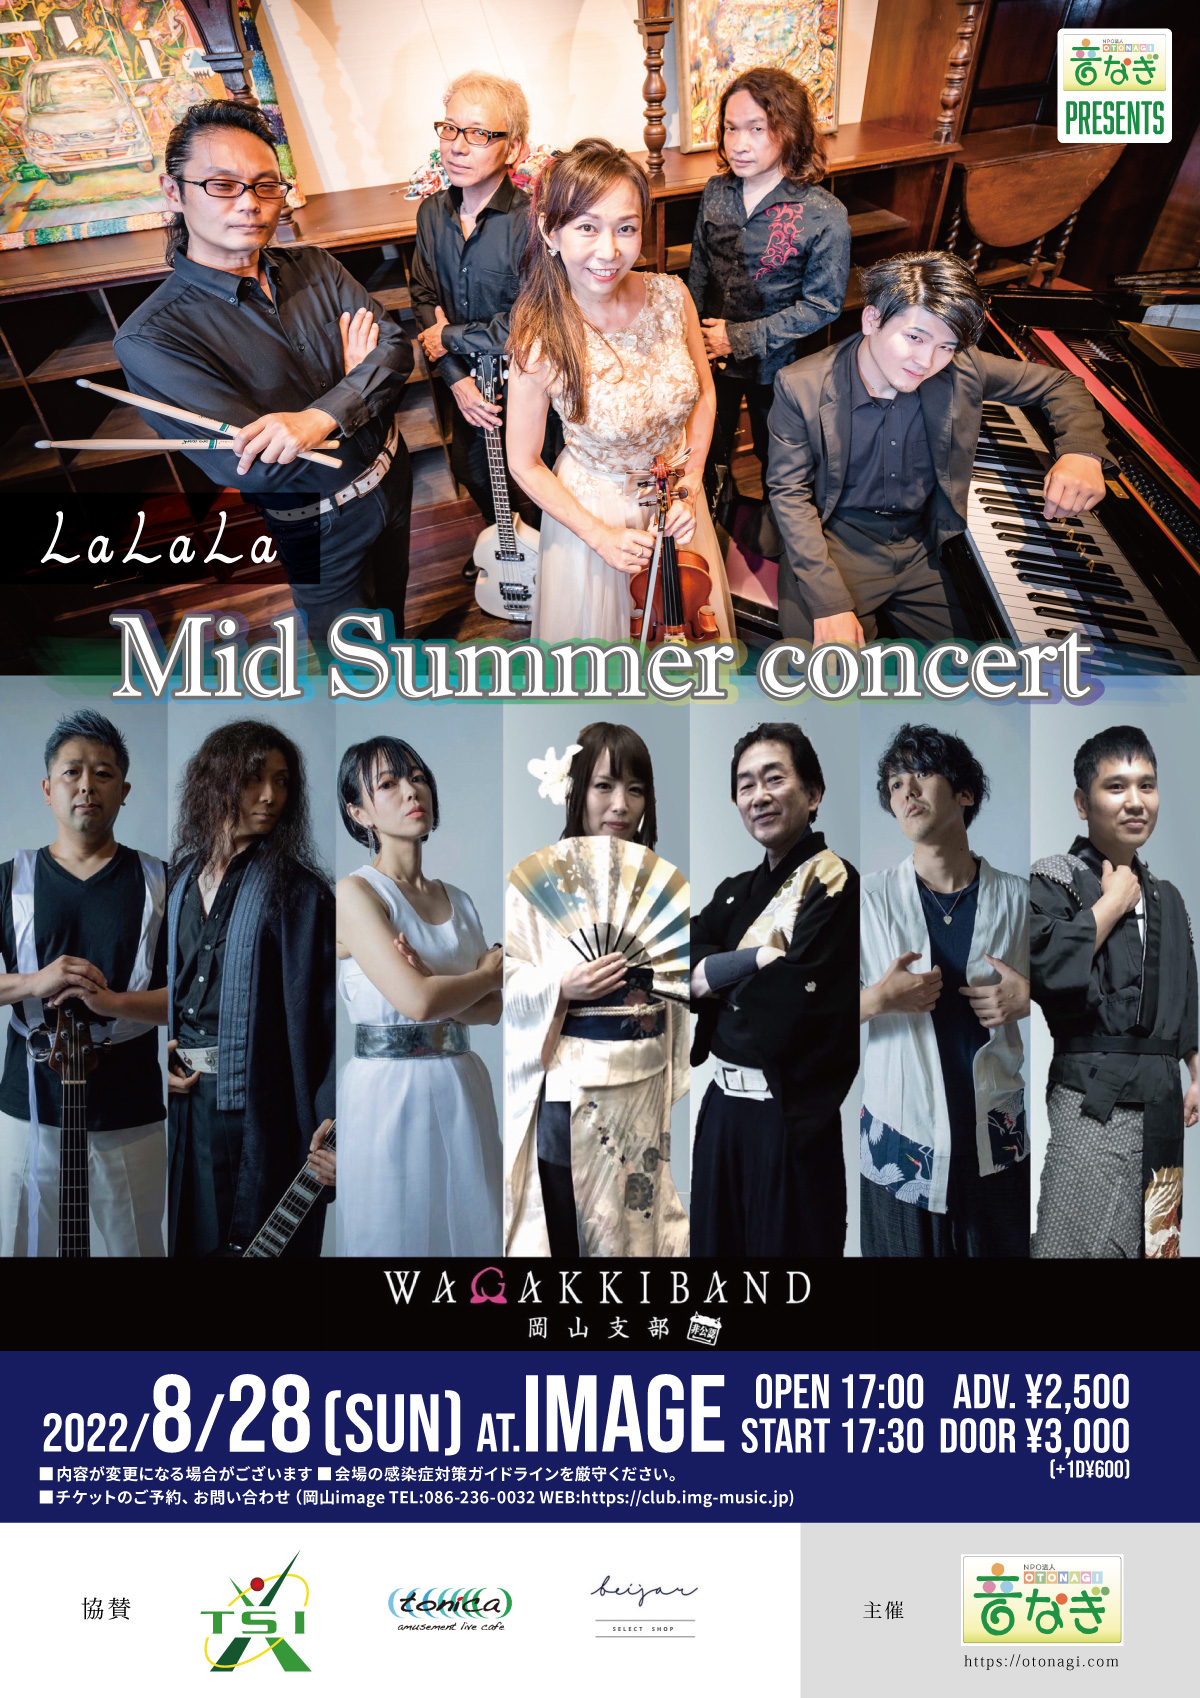 Mid Summer concert